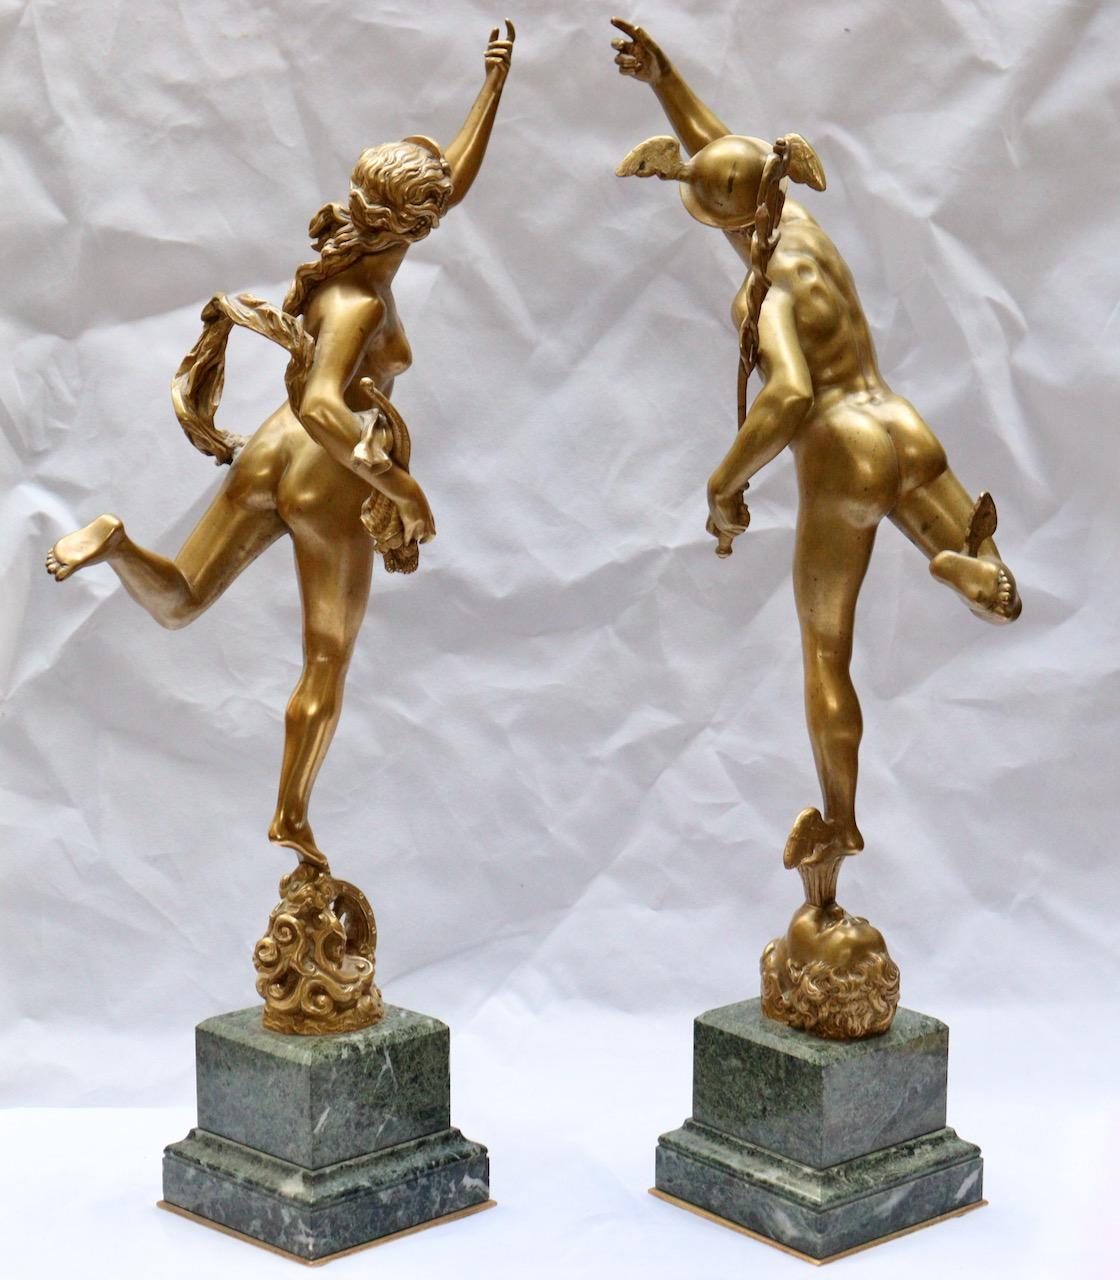 Gilt Mercury & Fortuna, A 19th Century Pair of Bronze Sculptures After Giambologna